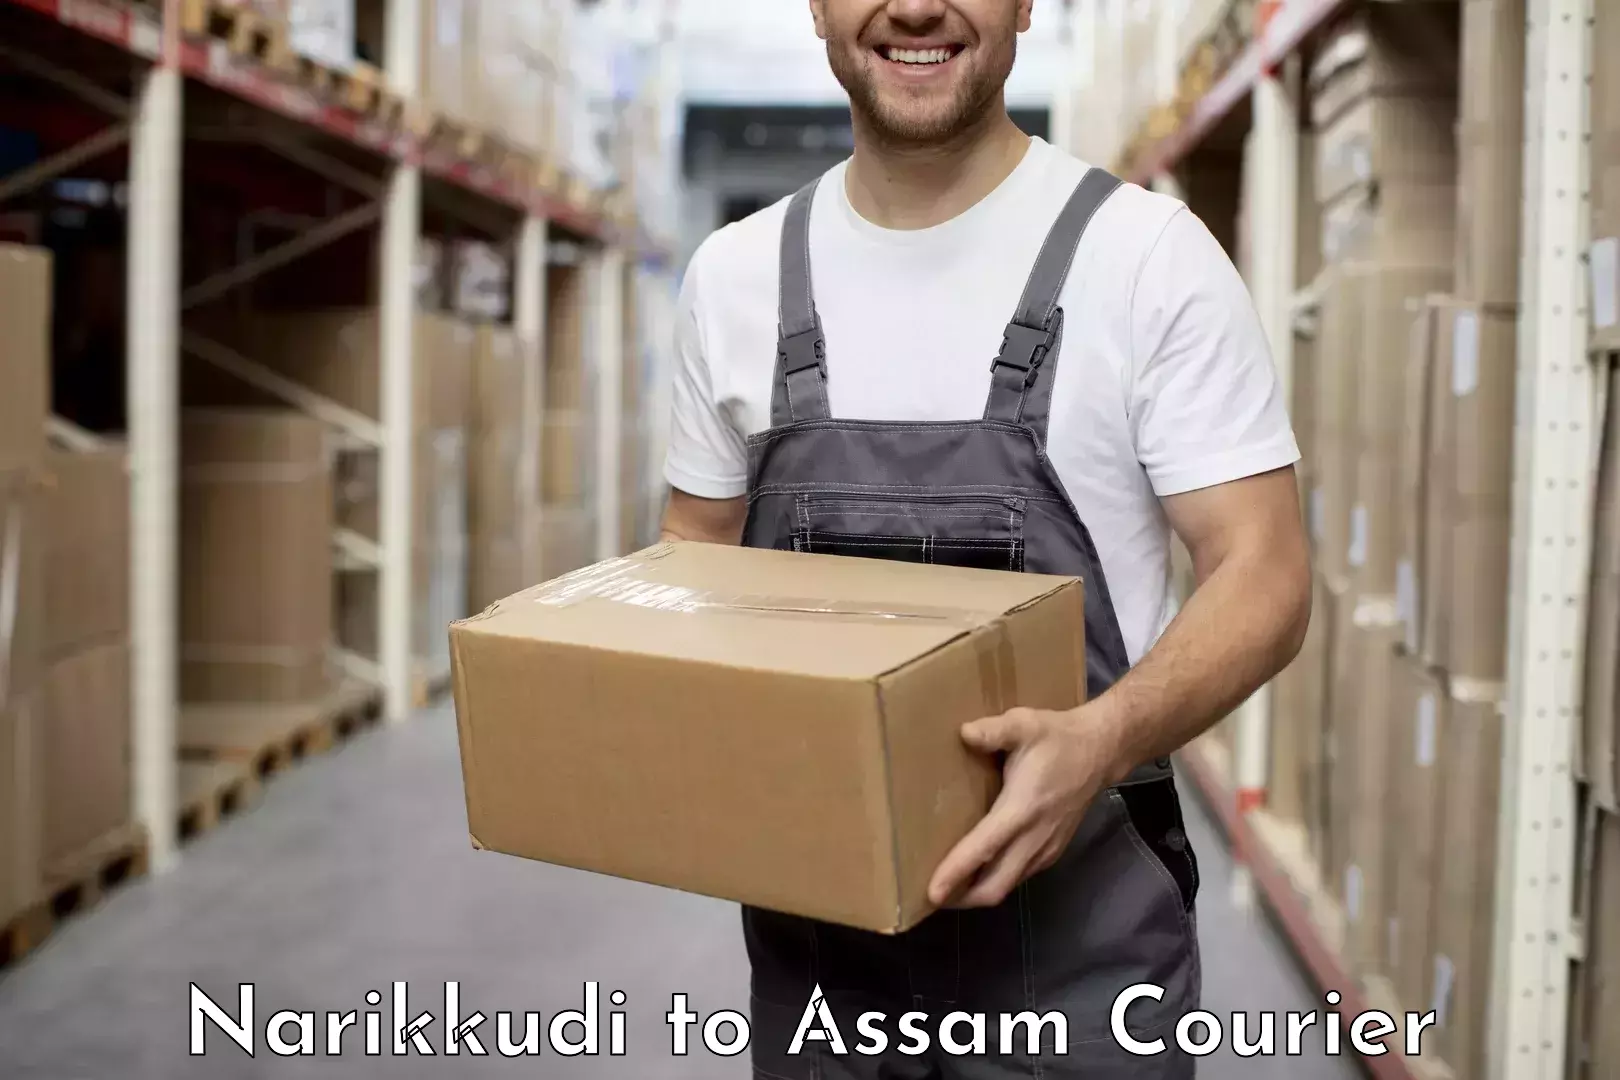 State-of-the-art courier technology Narikkudi to Assam